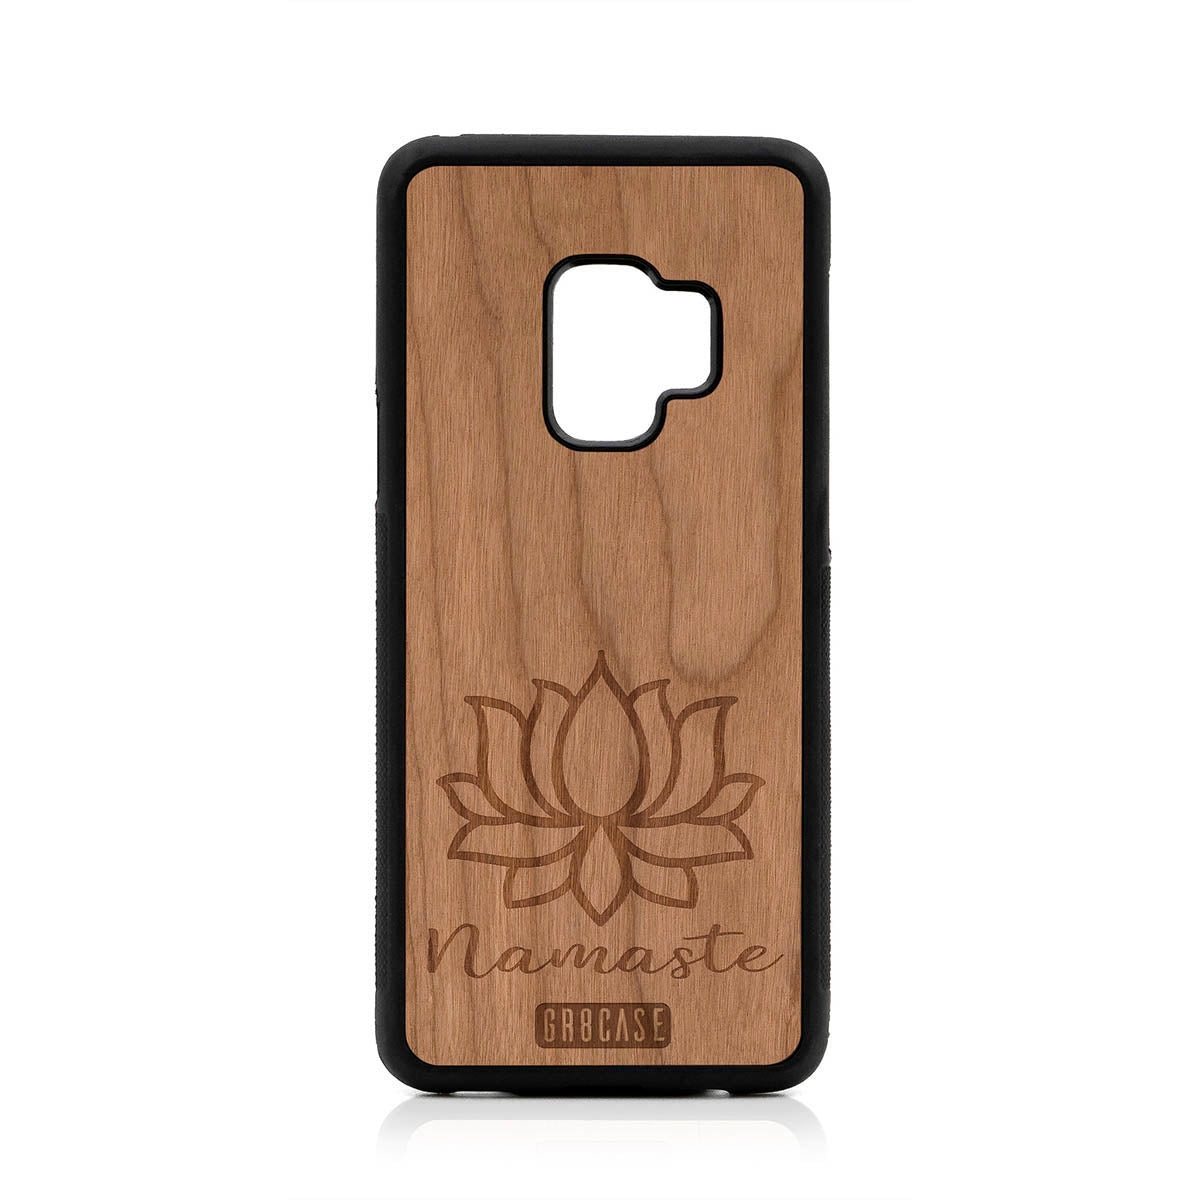 Namaste (Lotus Flower) Design Wood Case For Samsung Galaxy S9